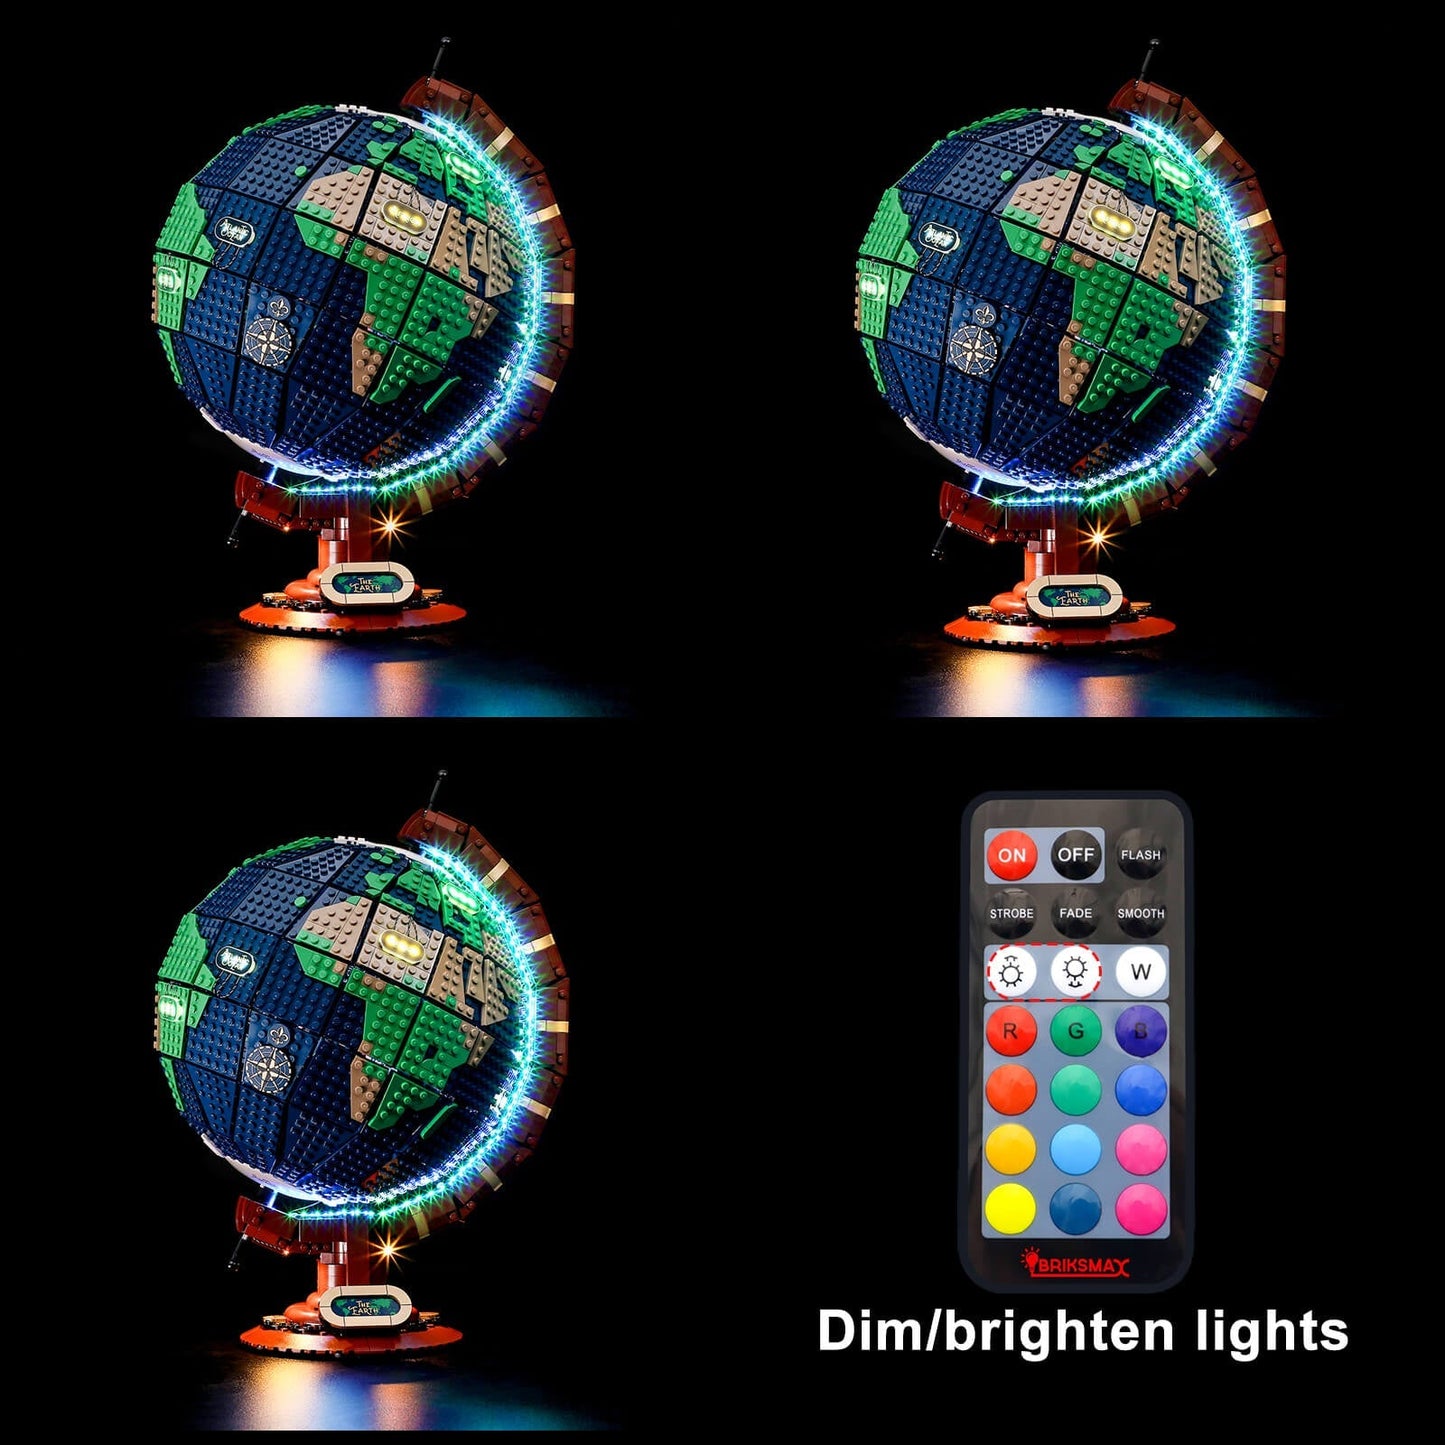 dim/brighten the lights of The Globe 21332